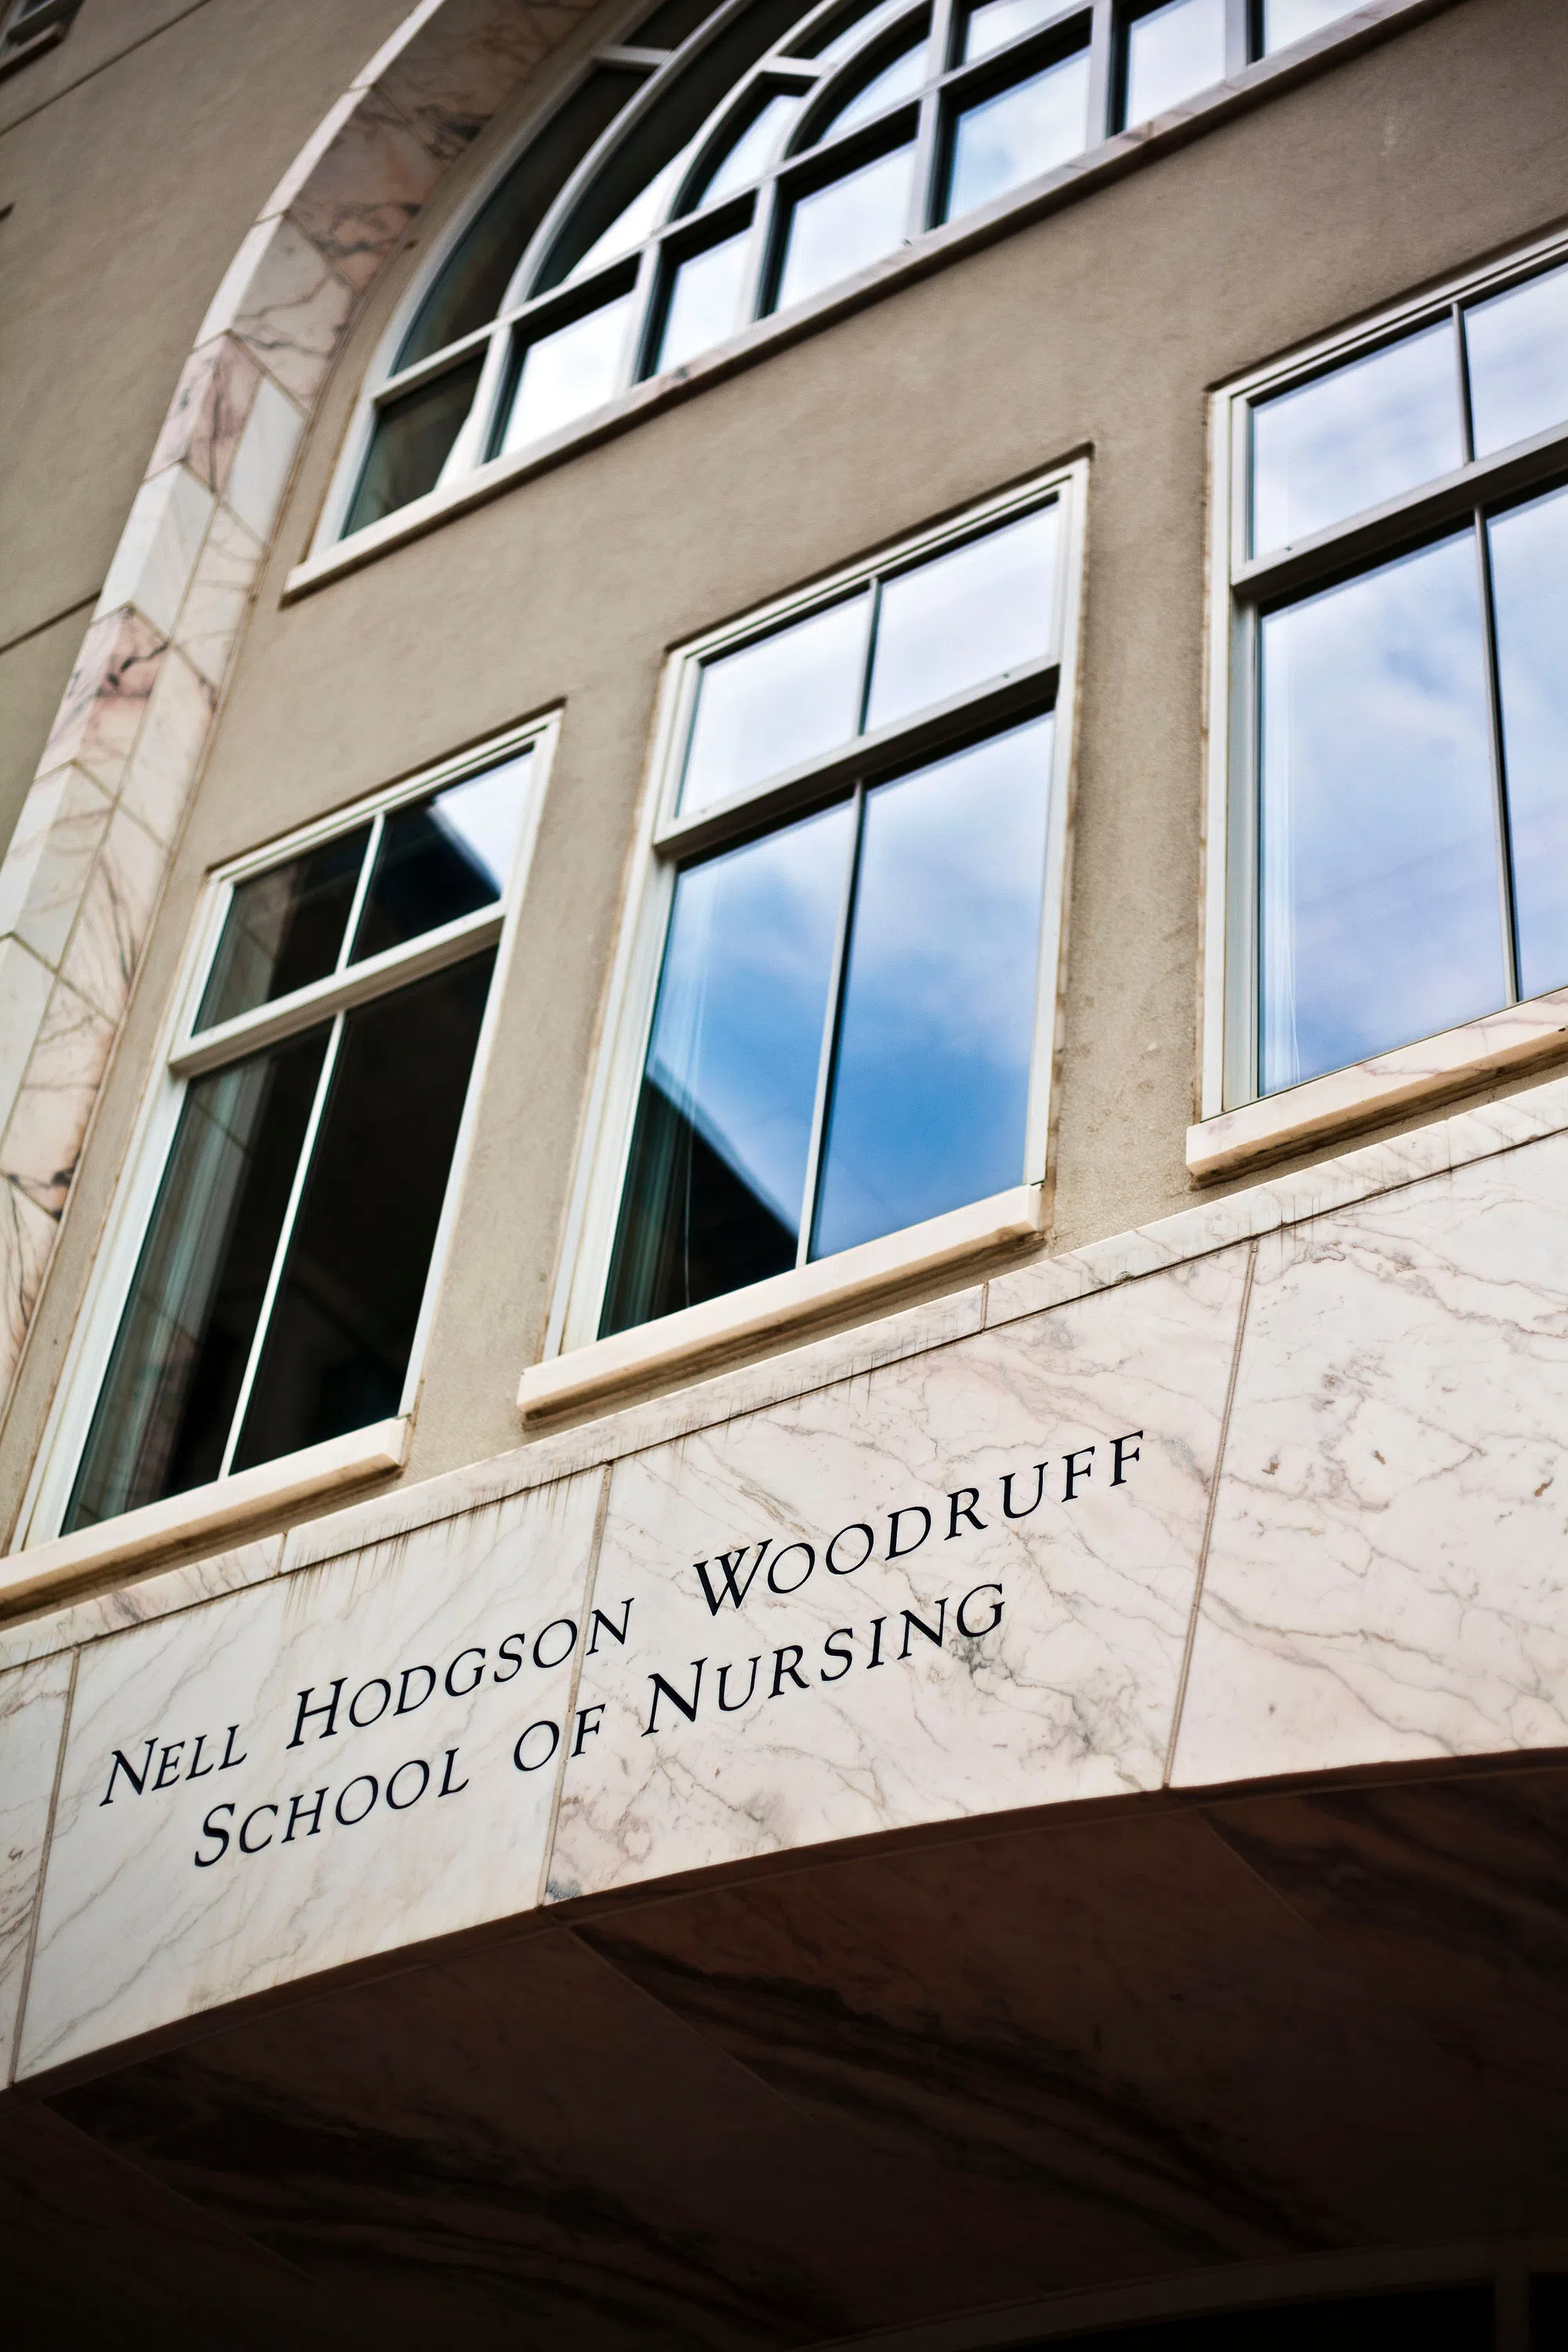 Nell Hodgson Woodruff School of Nursing